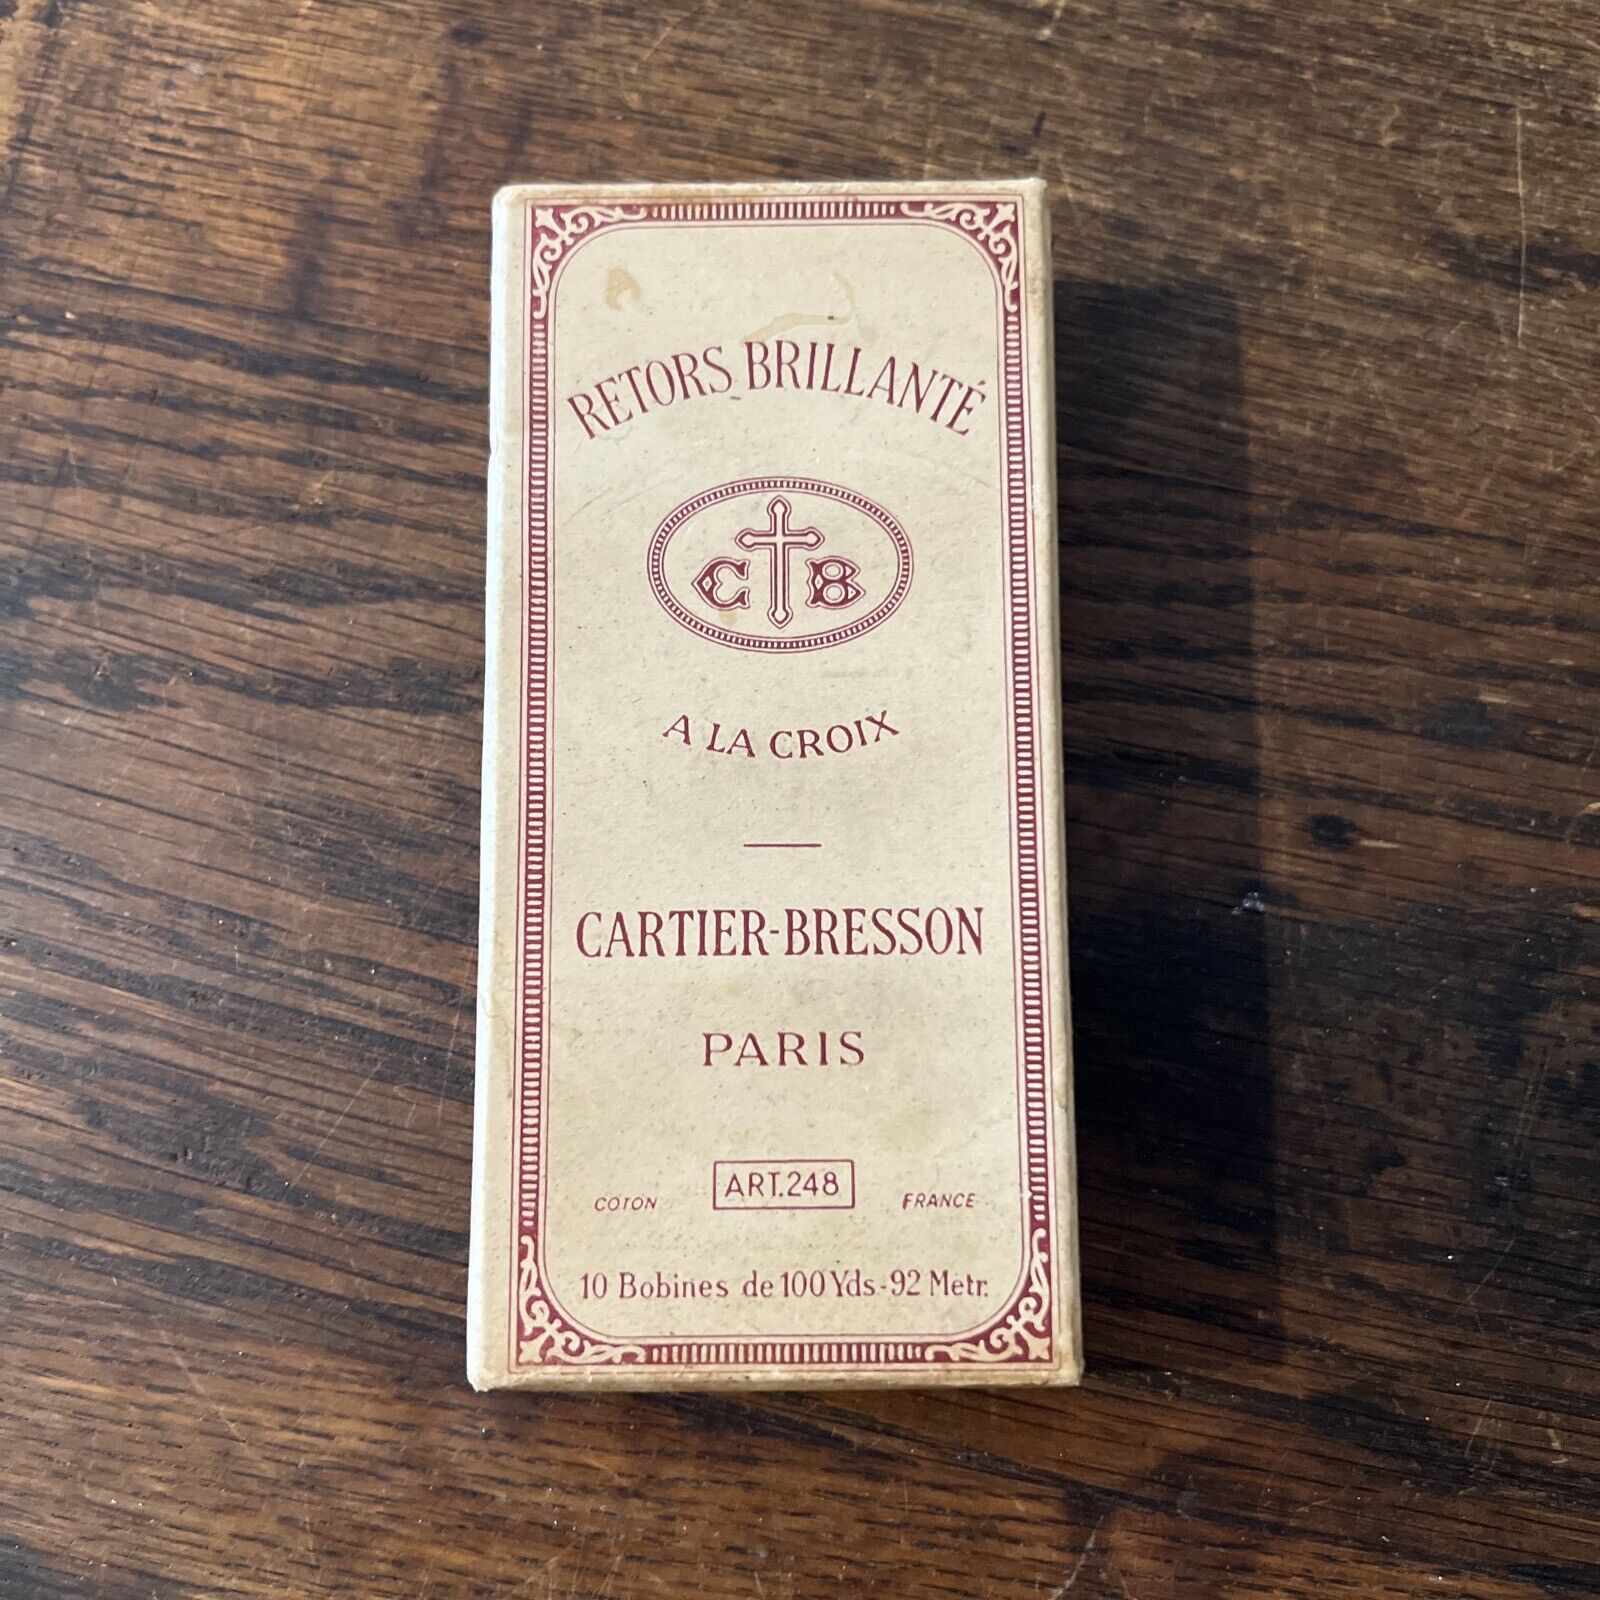 Cartier-Bresson Thread Box With Thread Vintage Paris Thread